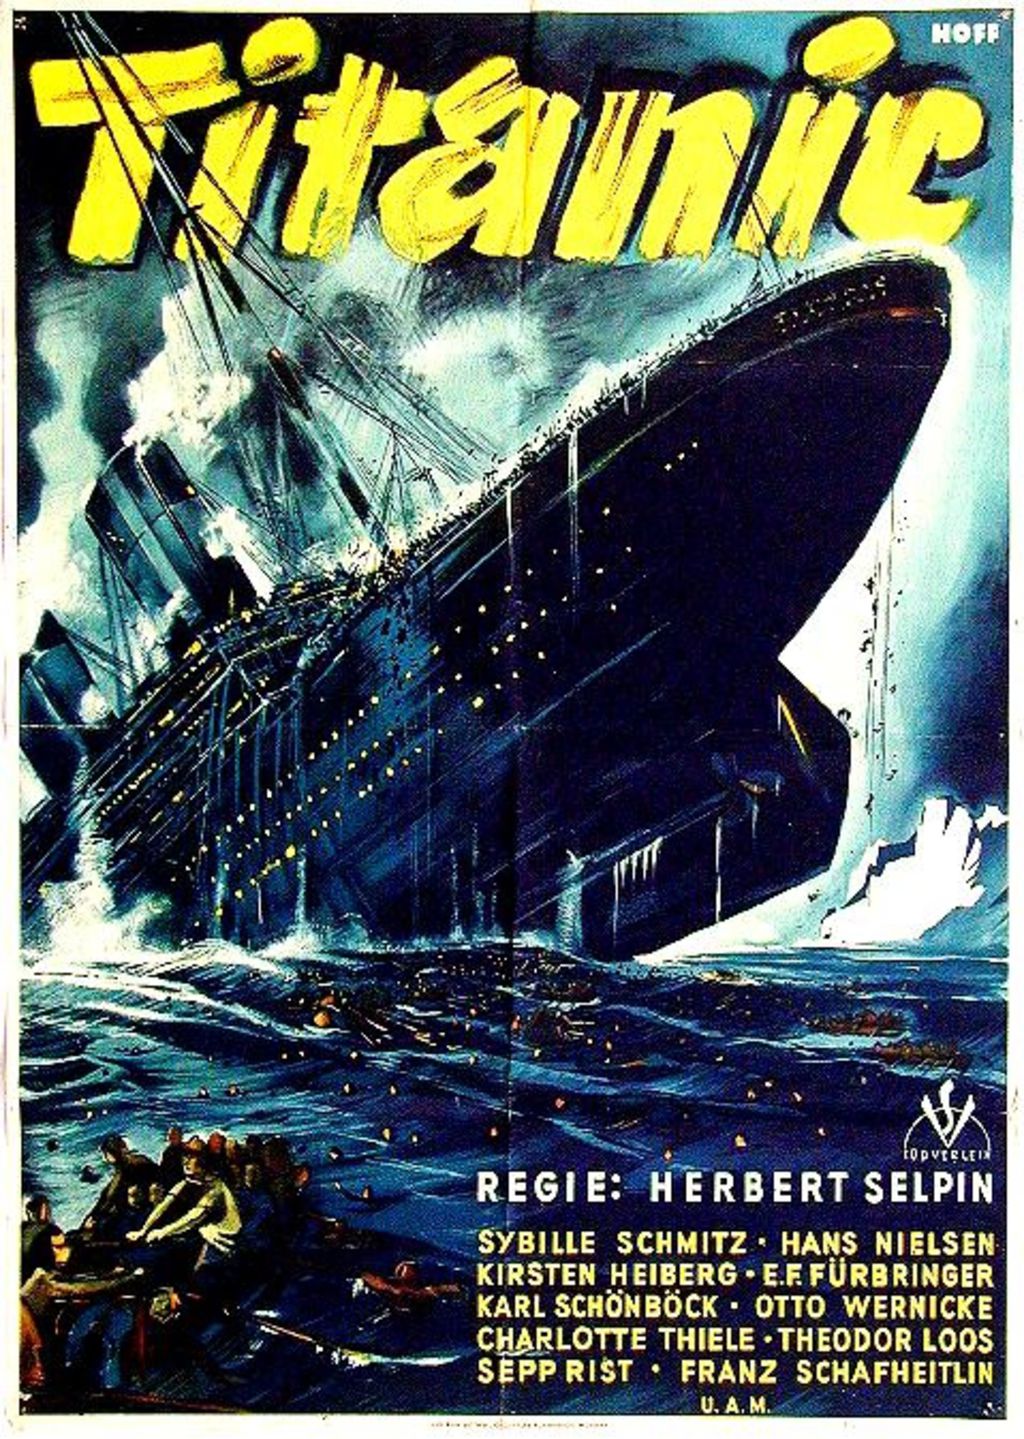 Plakat: Titanic, 1949/50